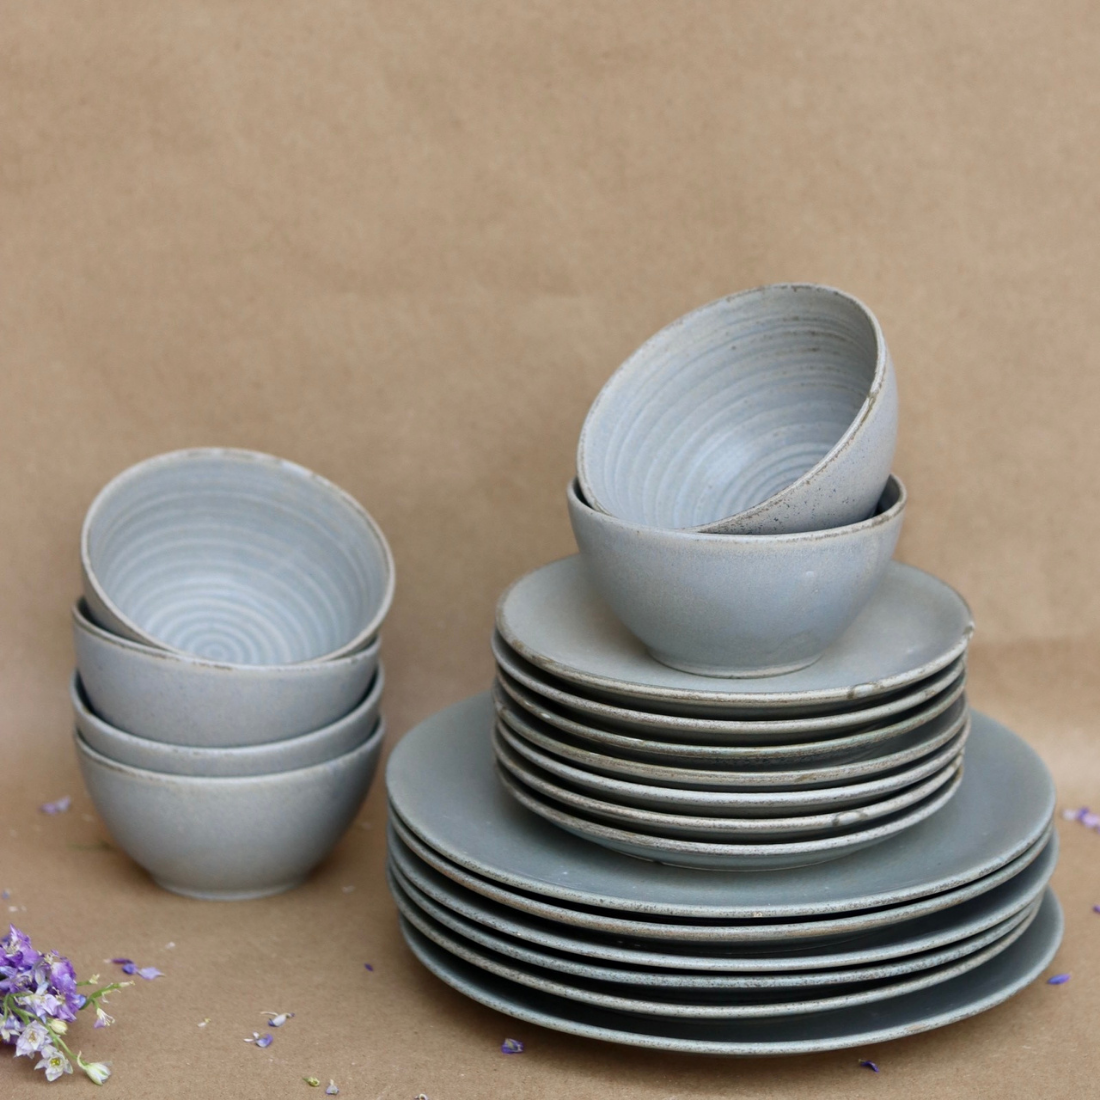 Ceramic earthy bowls & plates 